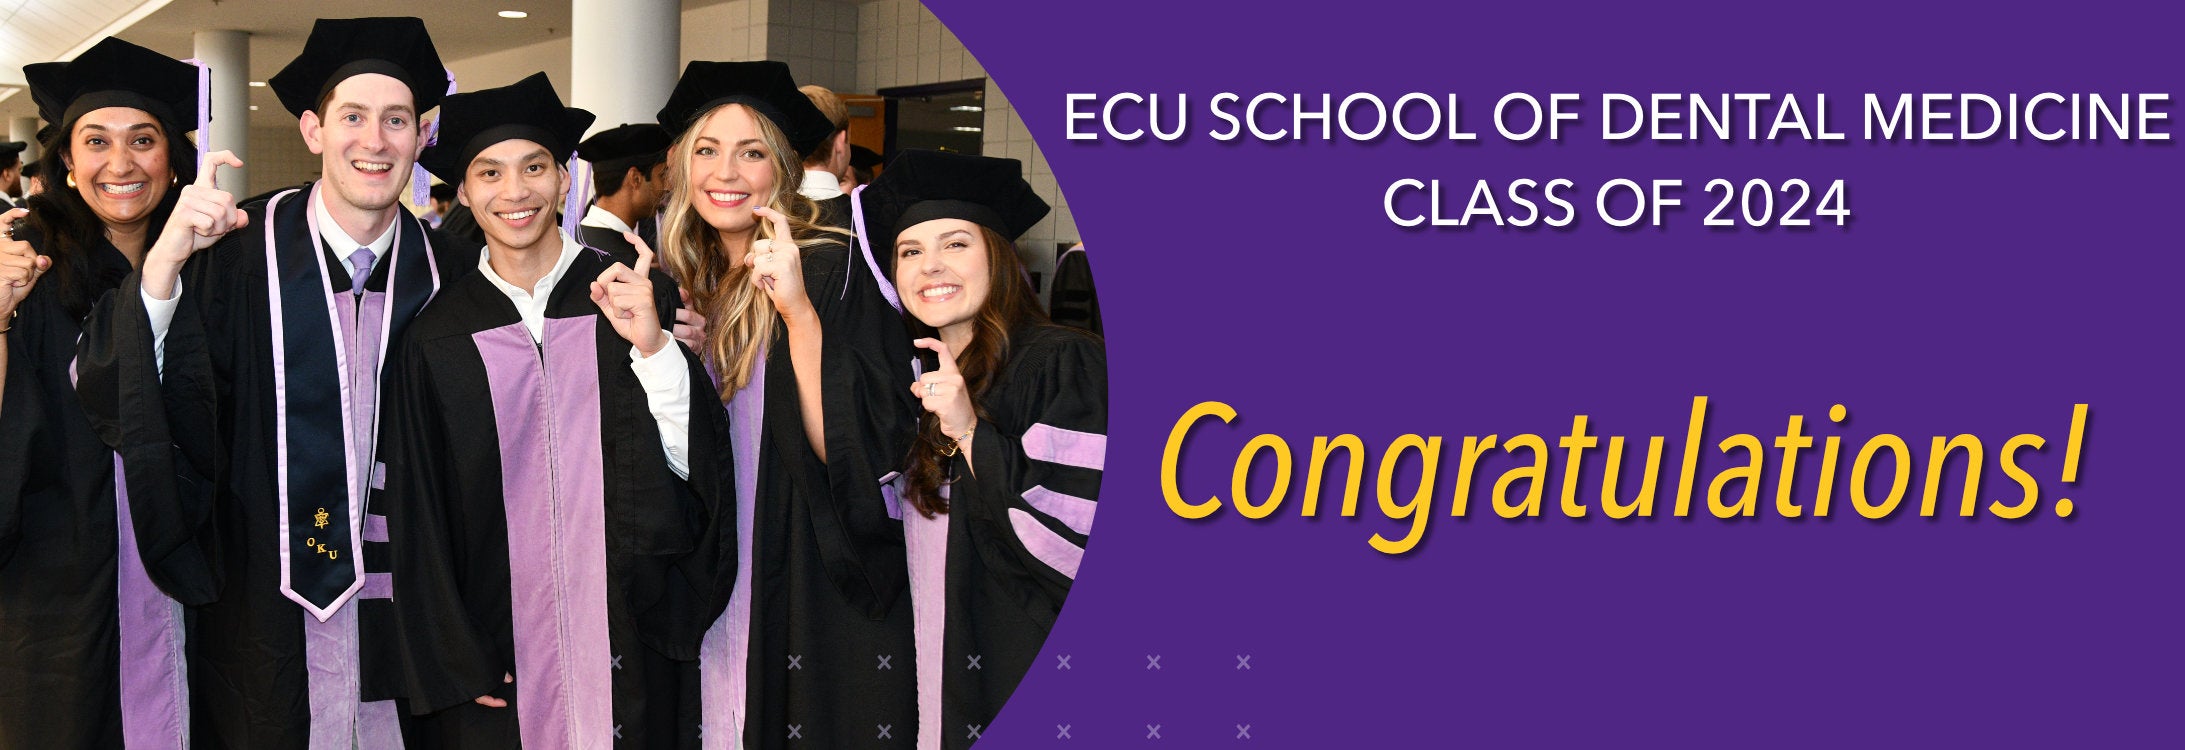 ECU School of Dental Medicine Class of 2024: Congratulations